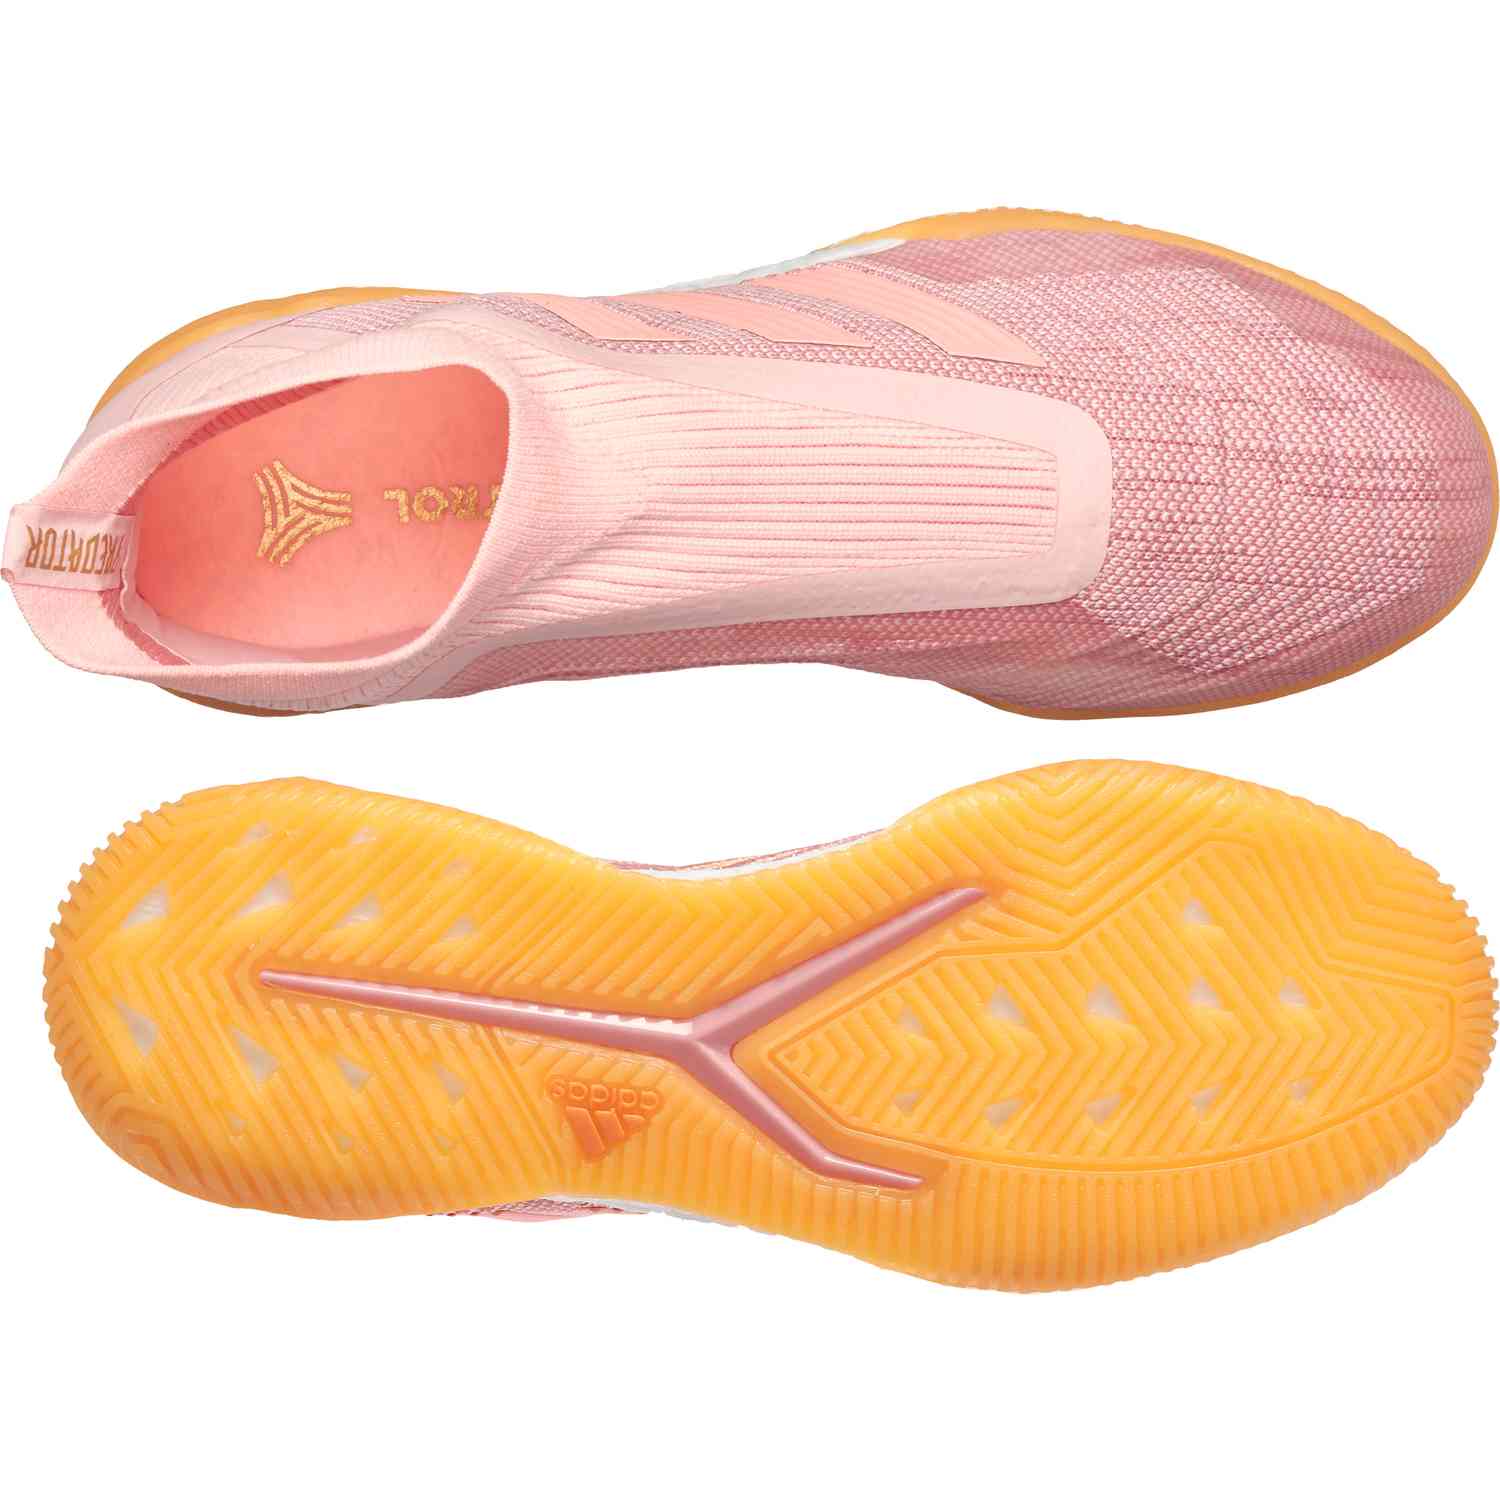 pink predator shoes